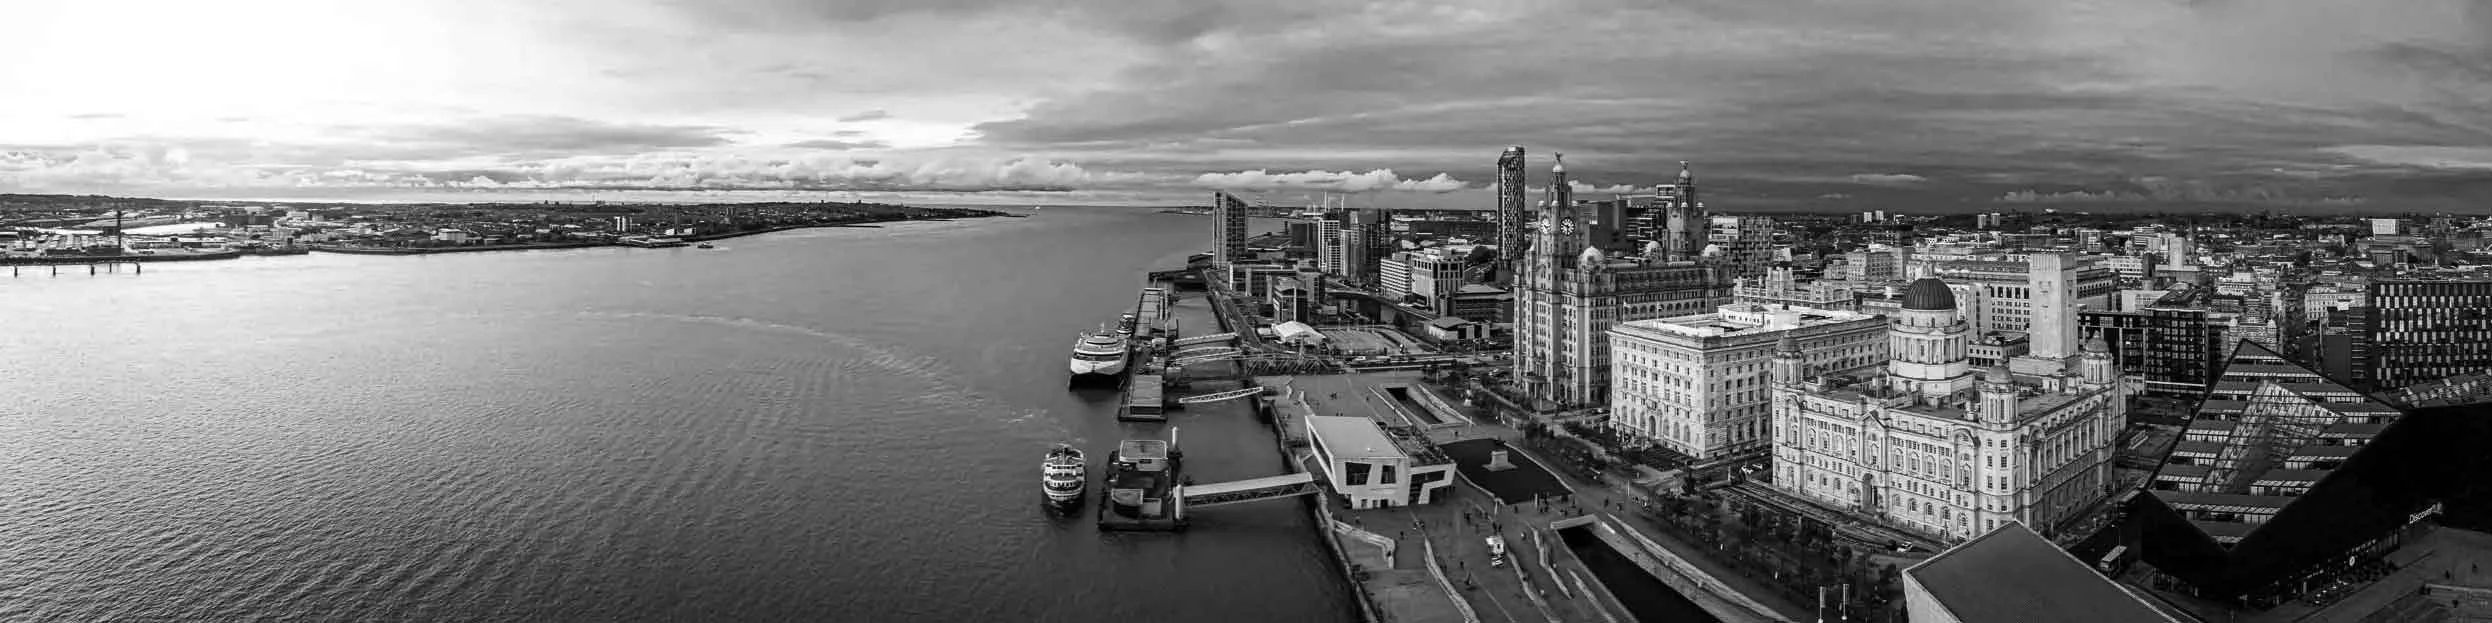 Liverpool city view